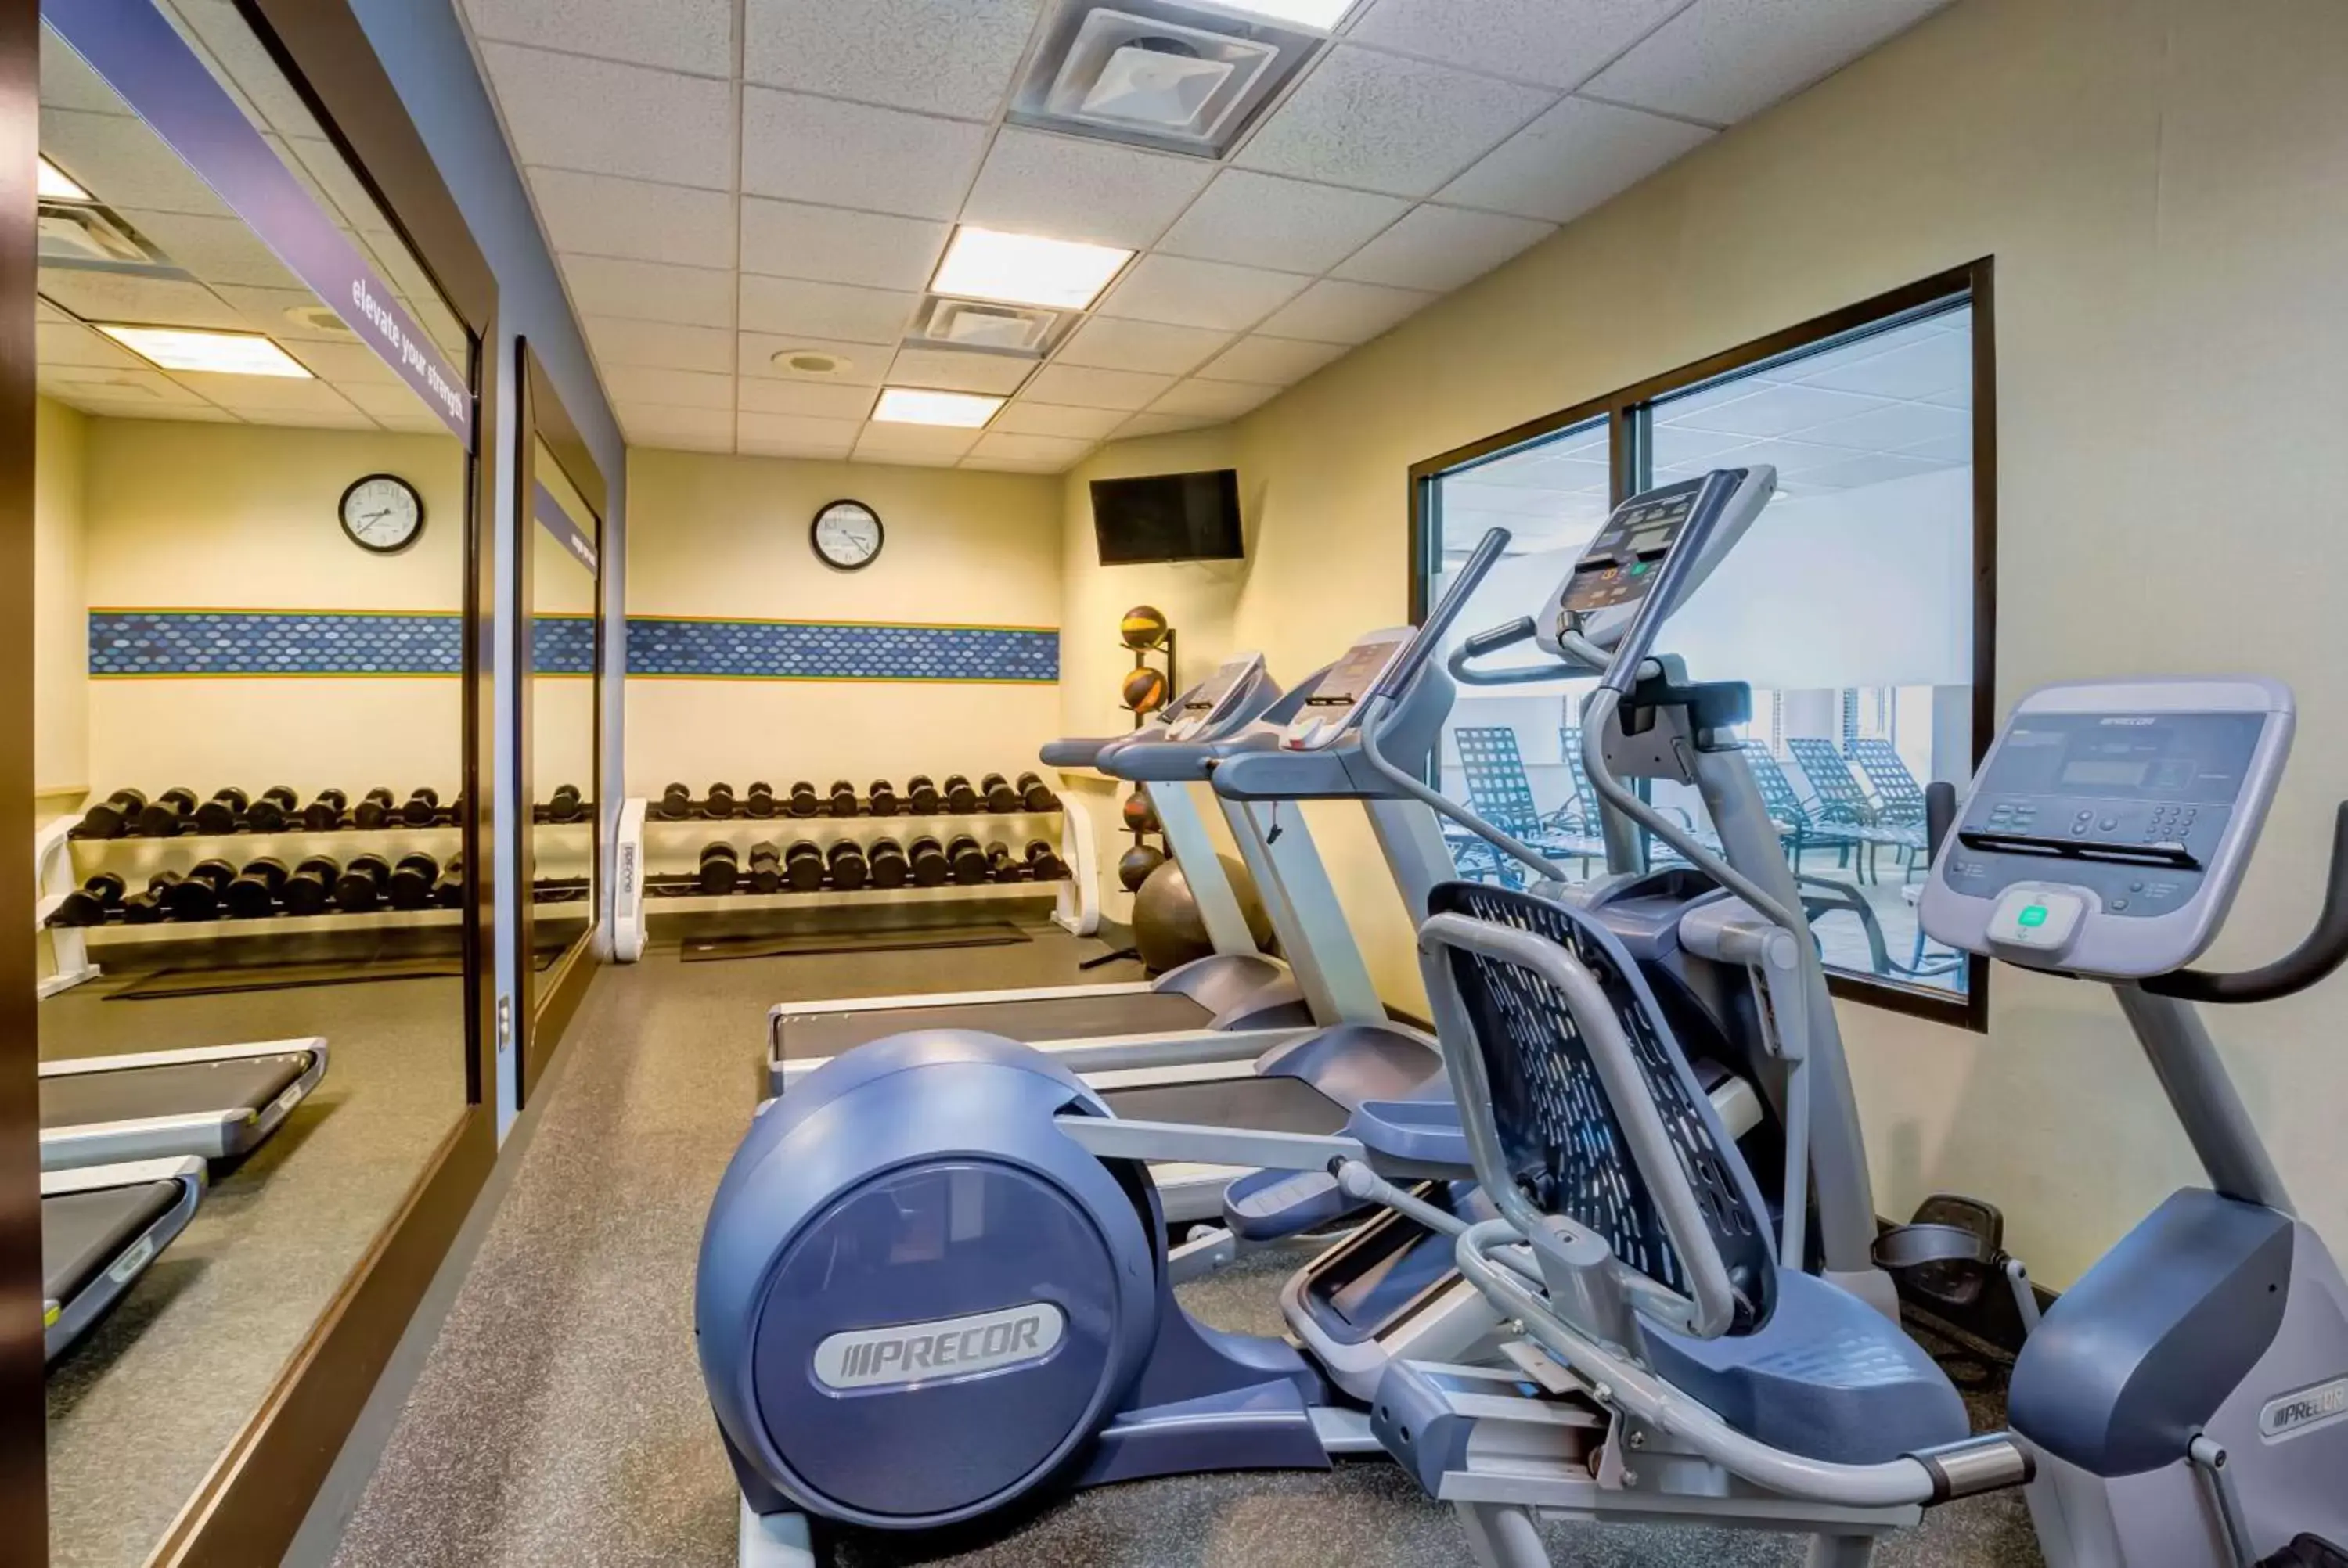 Fitness centre/facilities, Fitness Center/Facilities in Hampton Inn Boston-Norwood